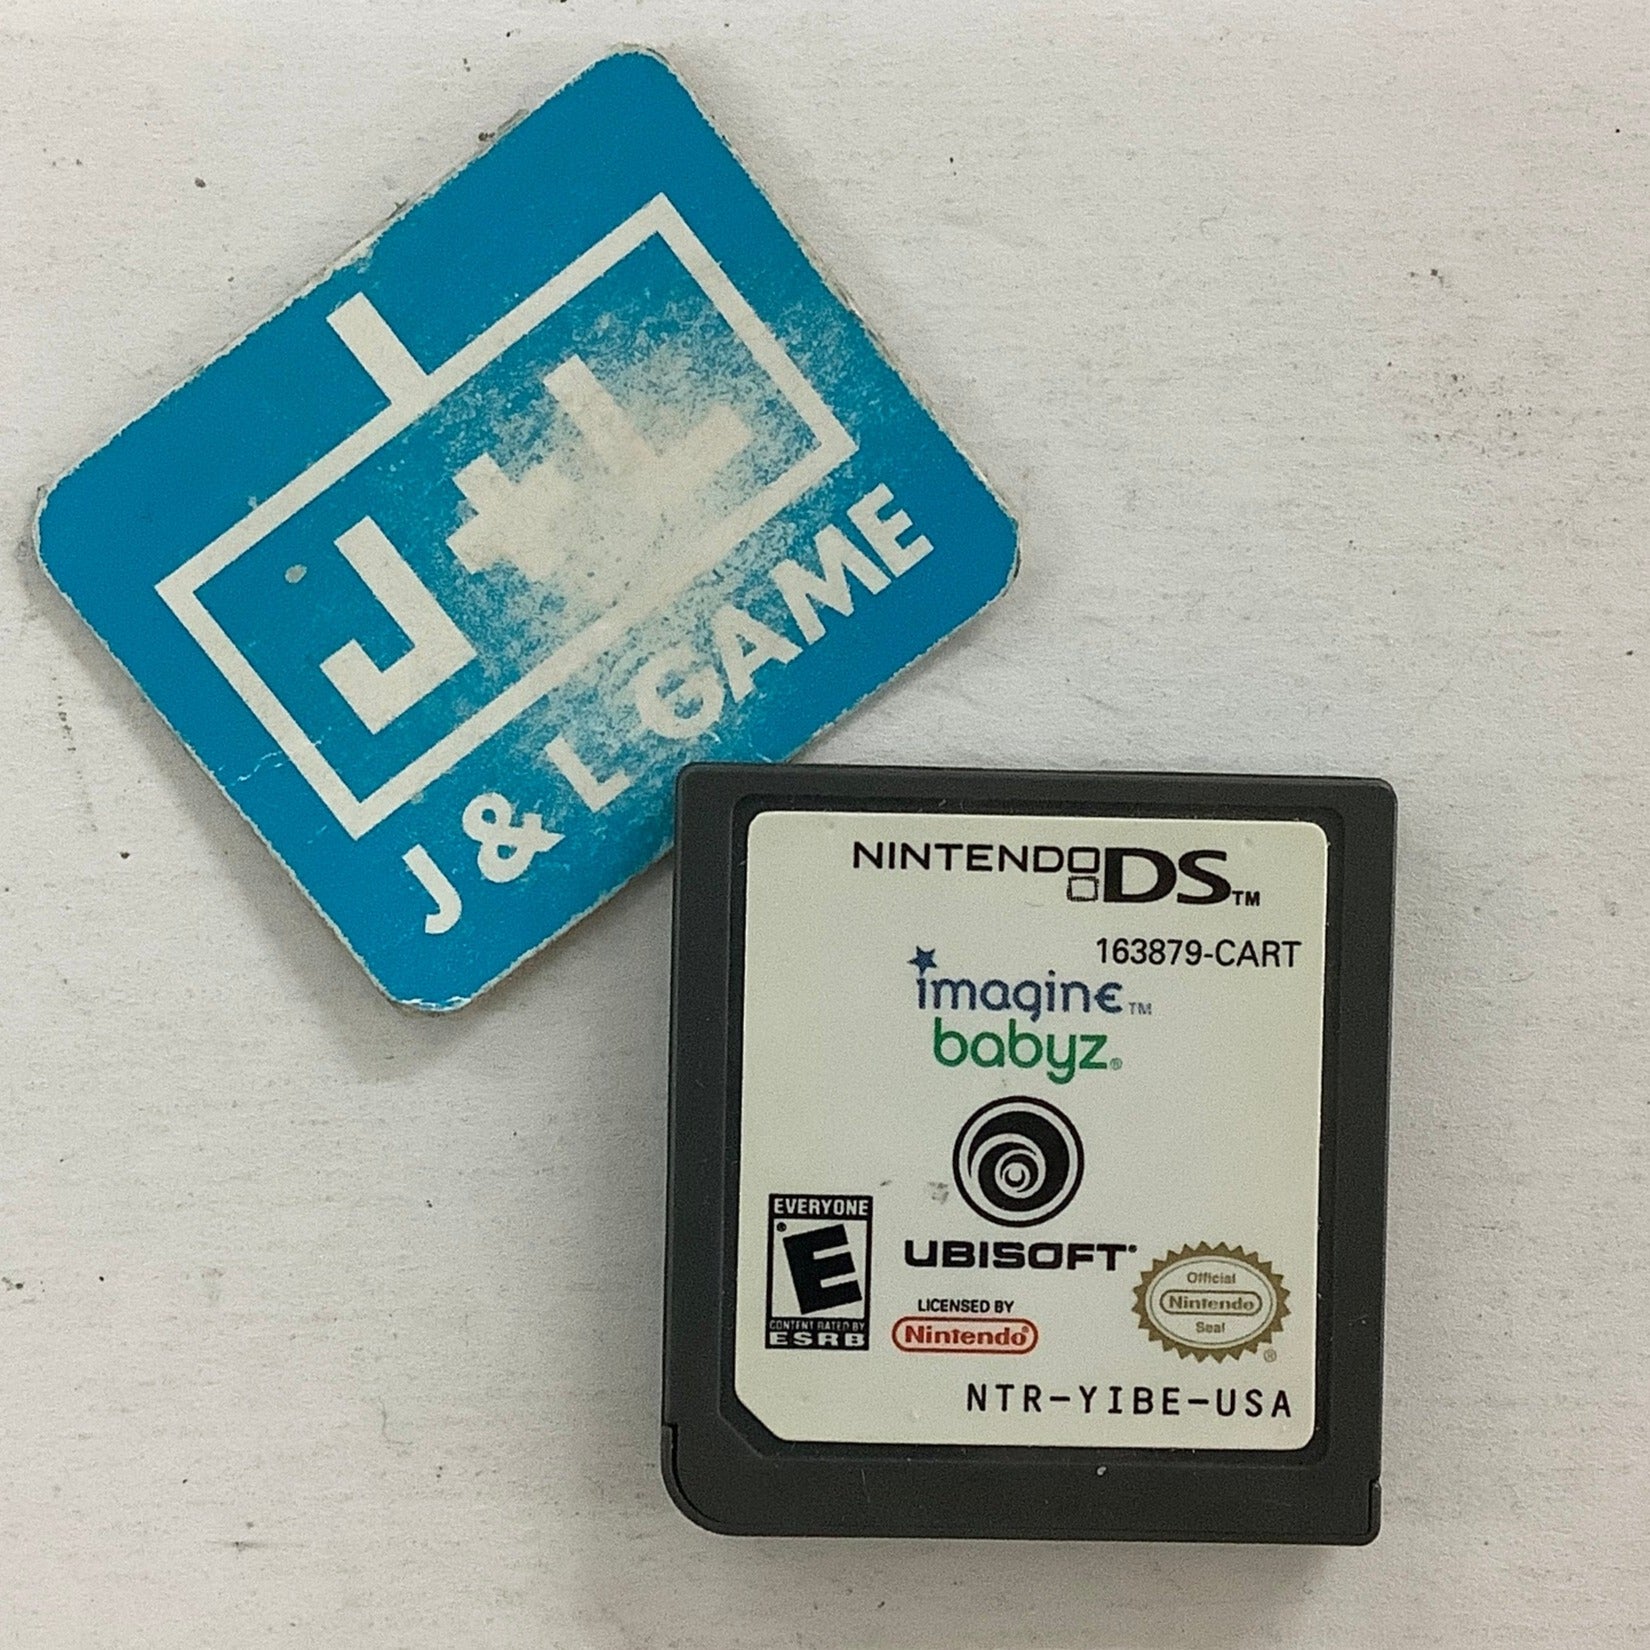 Imagine: Babyz - (NDS) Nintendo DS [Pre-Owned] Video Games Ubisoft   